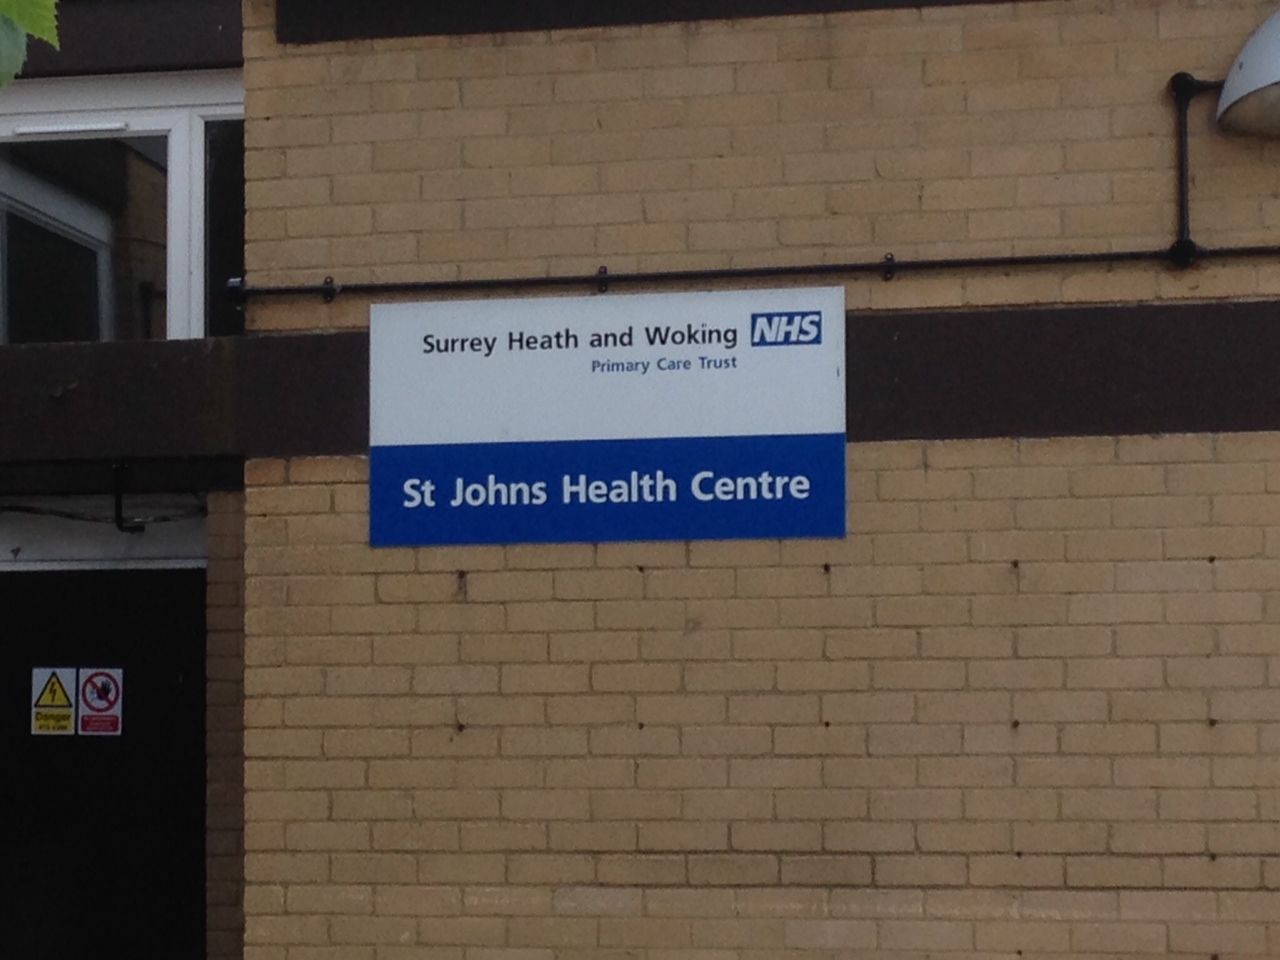 St Johns Health Centre. Photo by: Valerie Scott